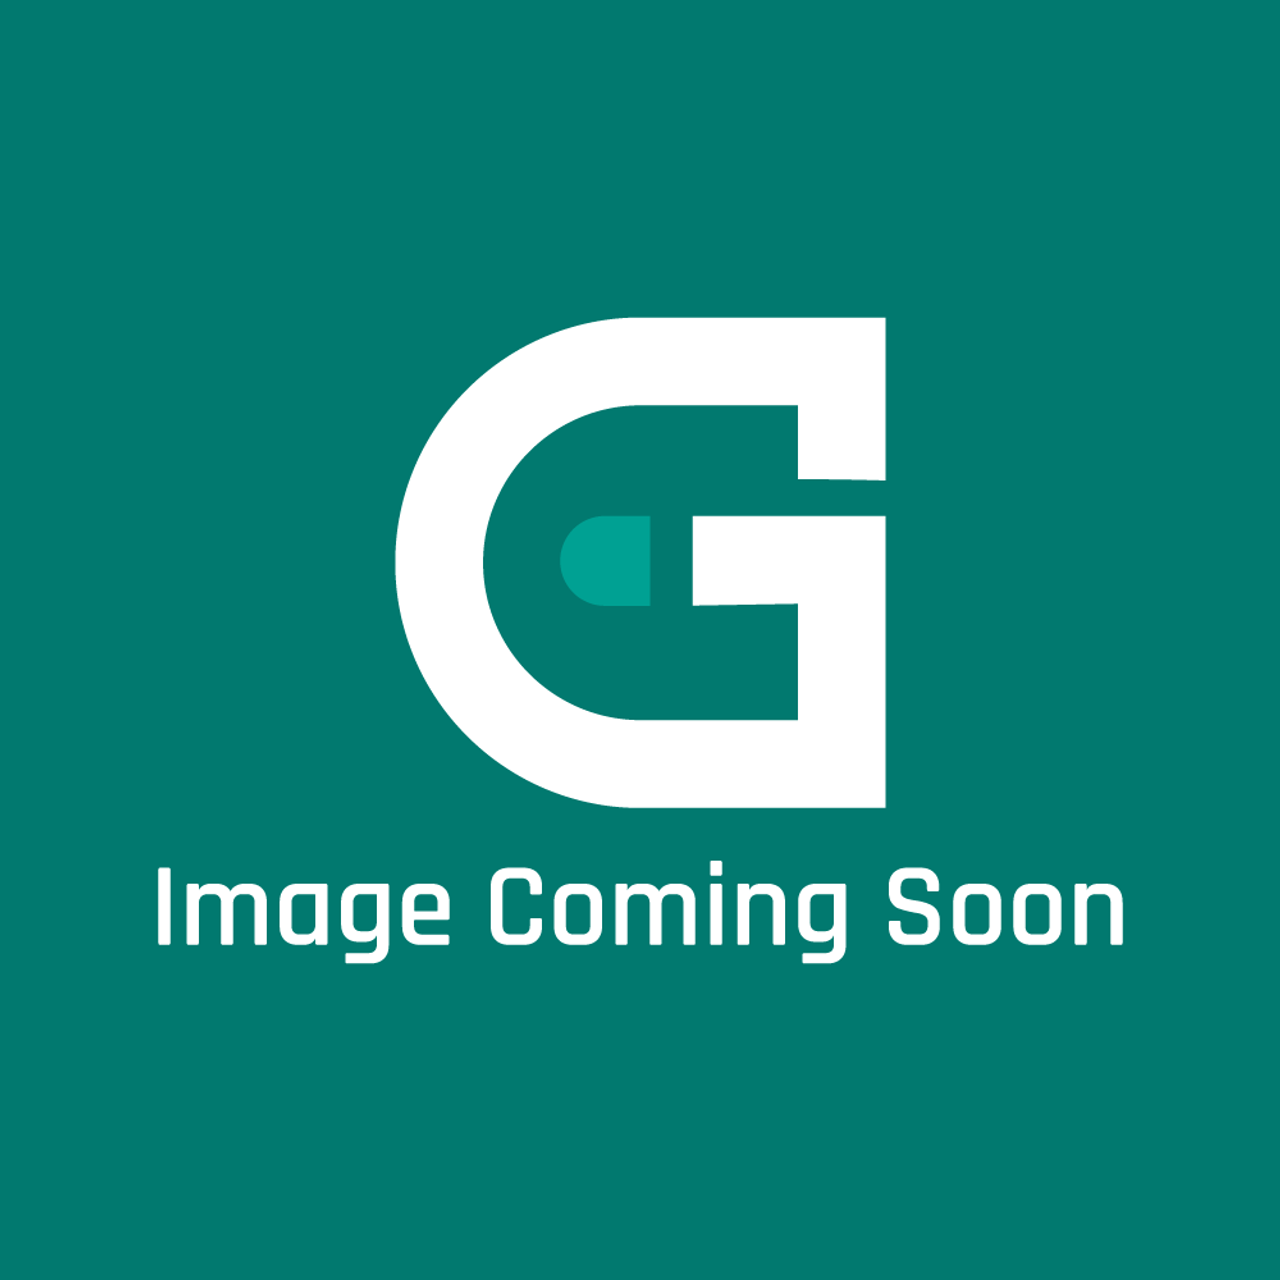 Stero G745371 - Deflector Heat Fr - Image Coming Soon!